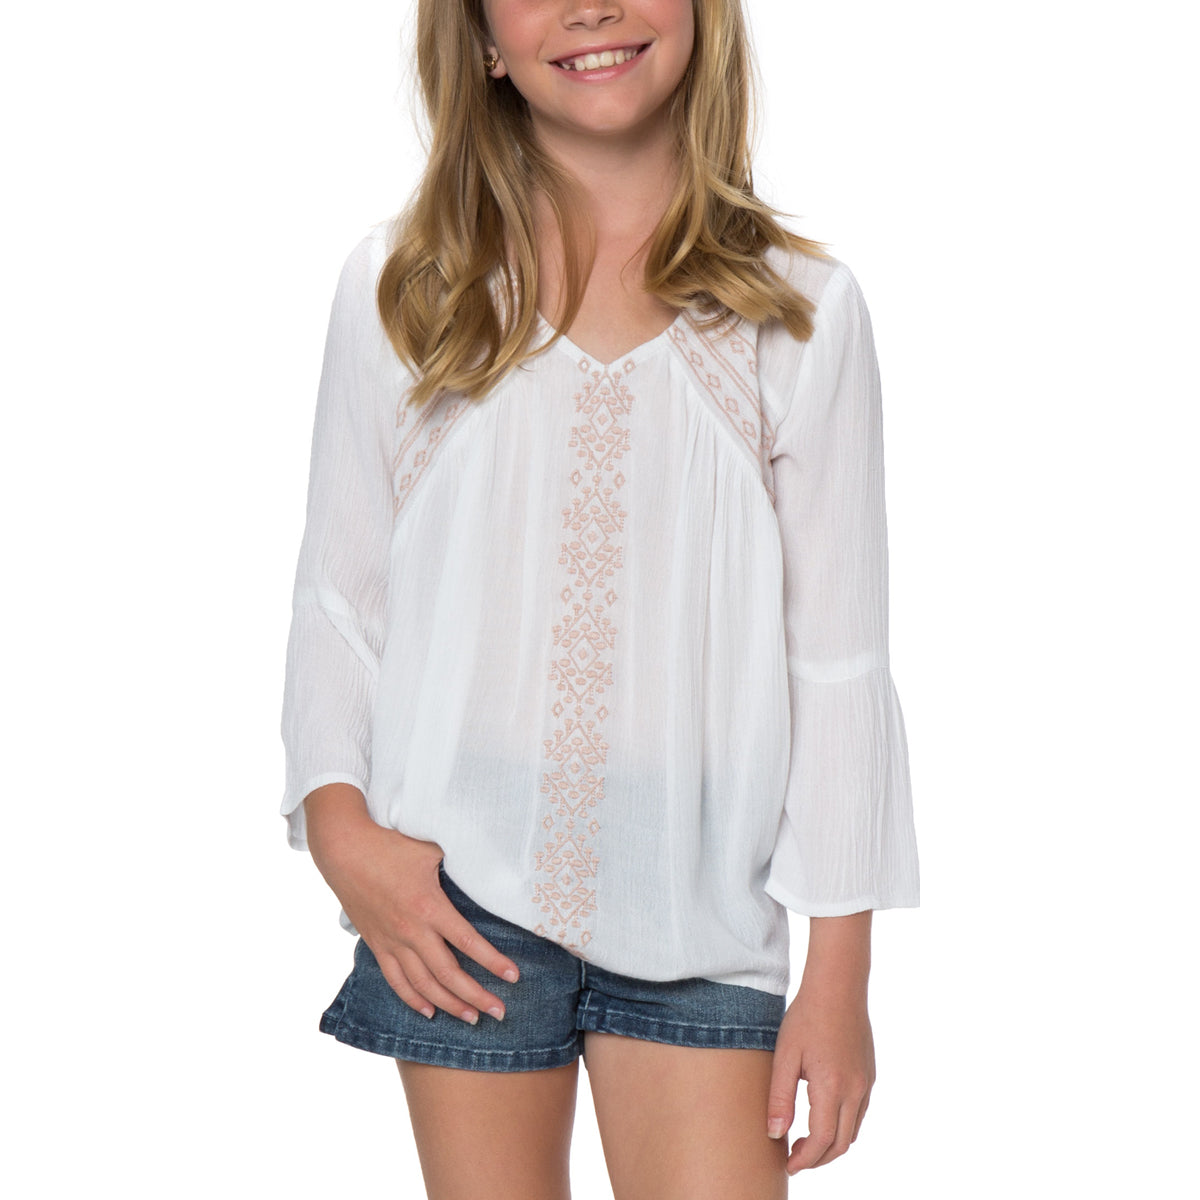 O'Neill Megan Youth Girls Top Shirts - White                         